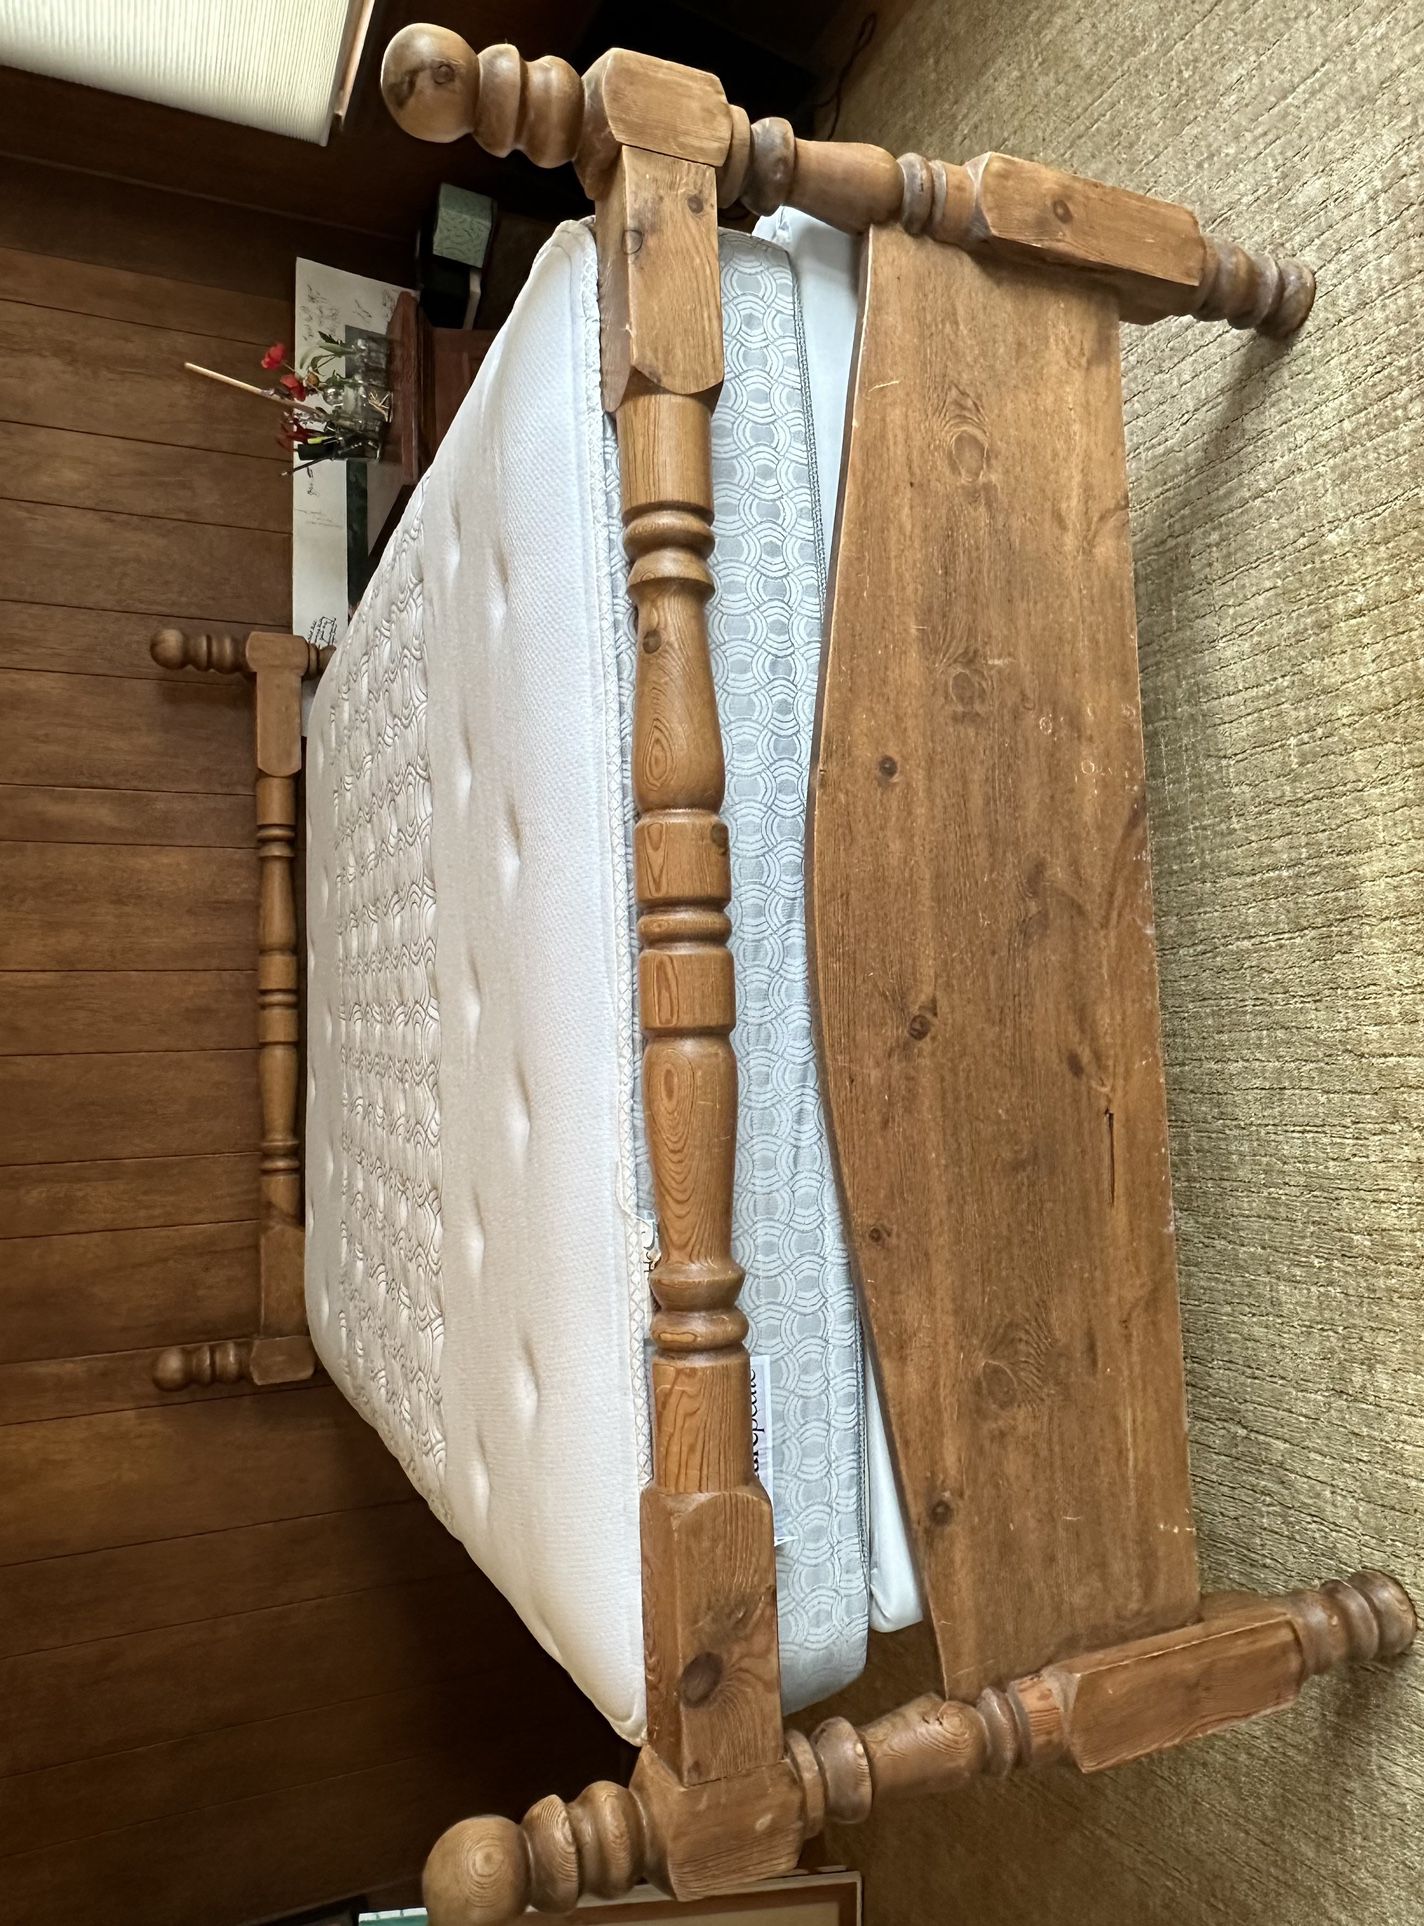 Queen Bed Frame And Mattress 